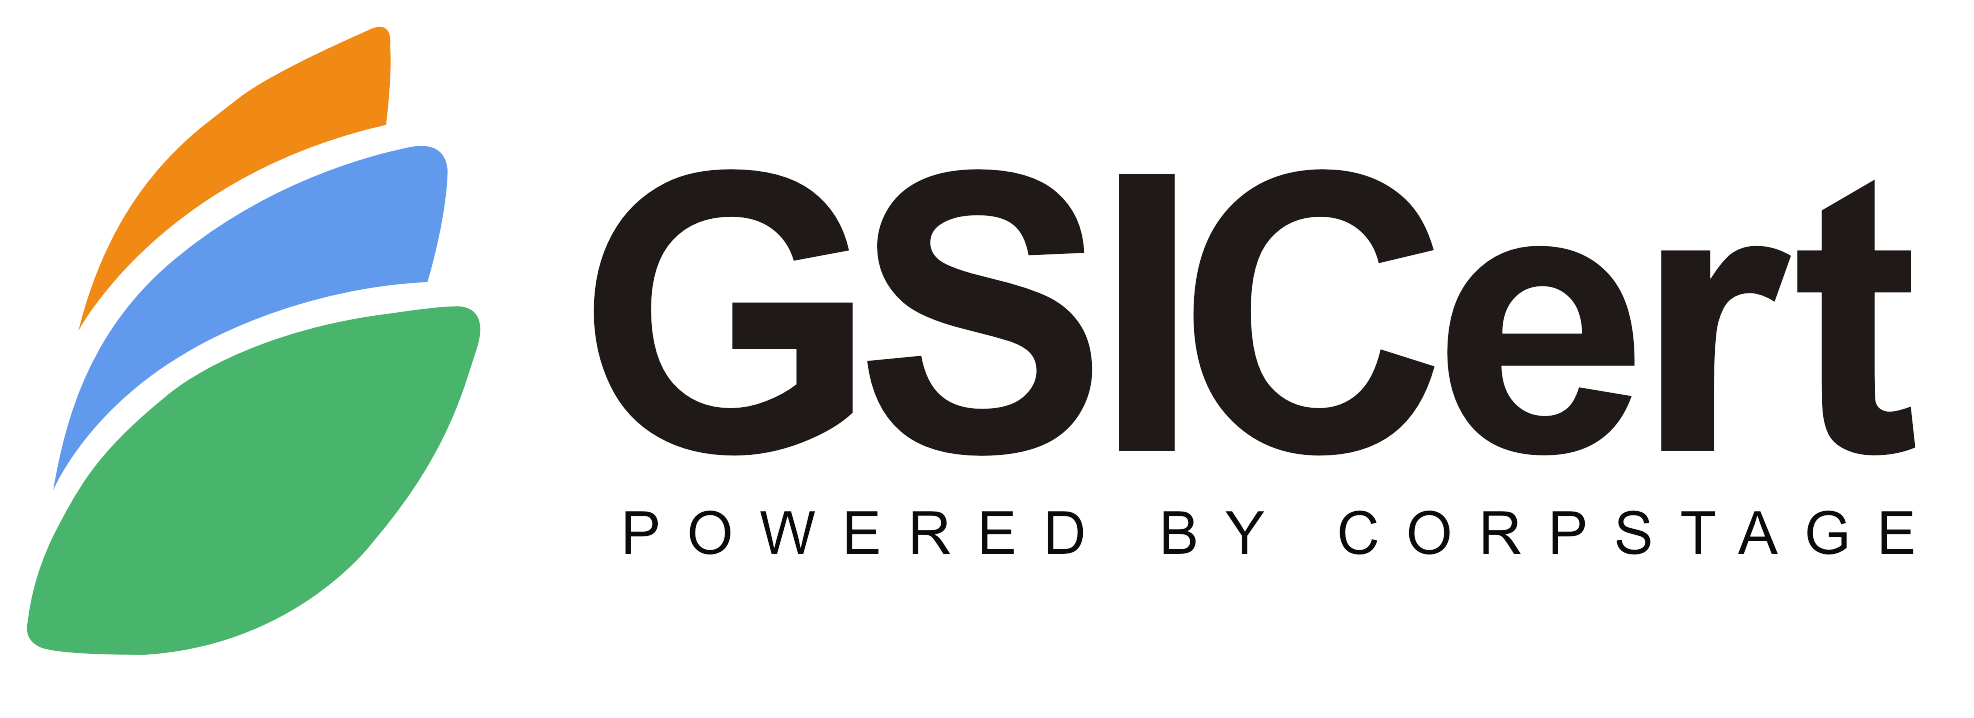 GSI Certification 